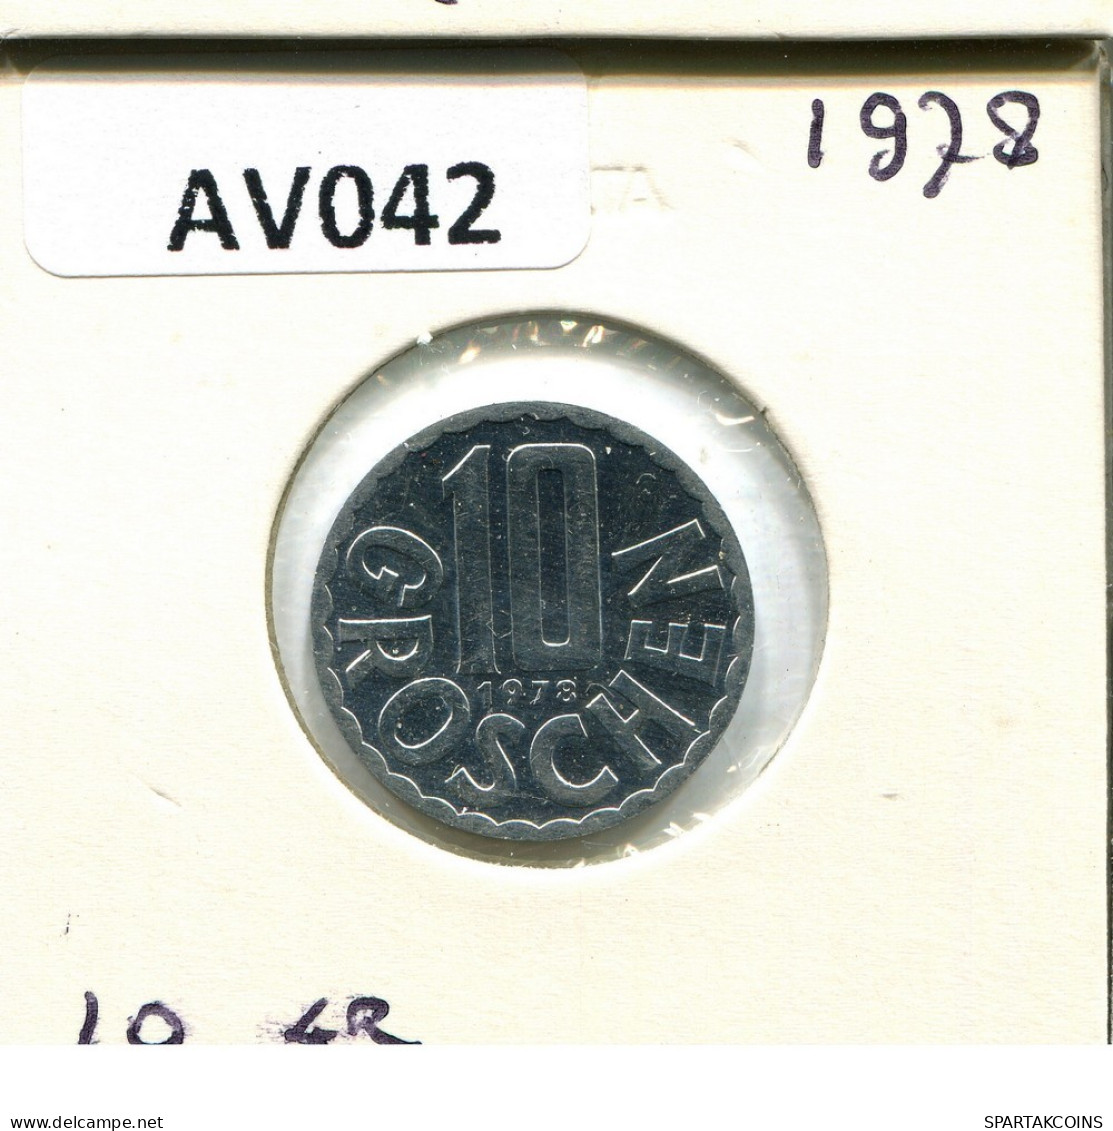 10 GROSCHEN 1978 AUSTRIA Coin #AV042.U.A - Austria